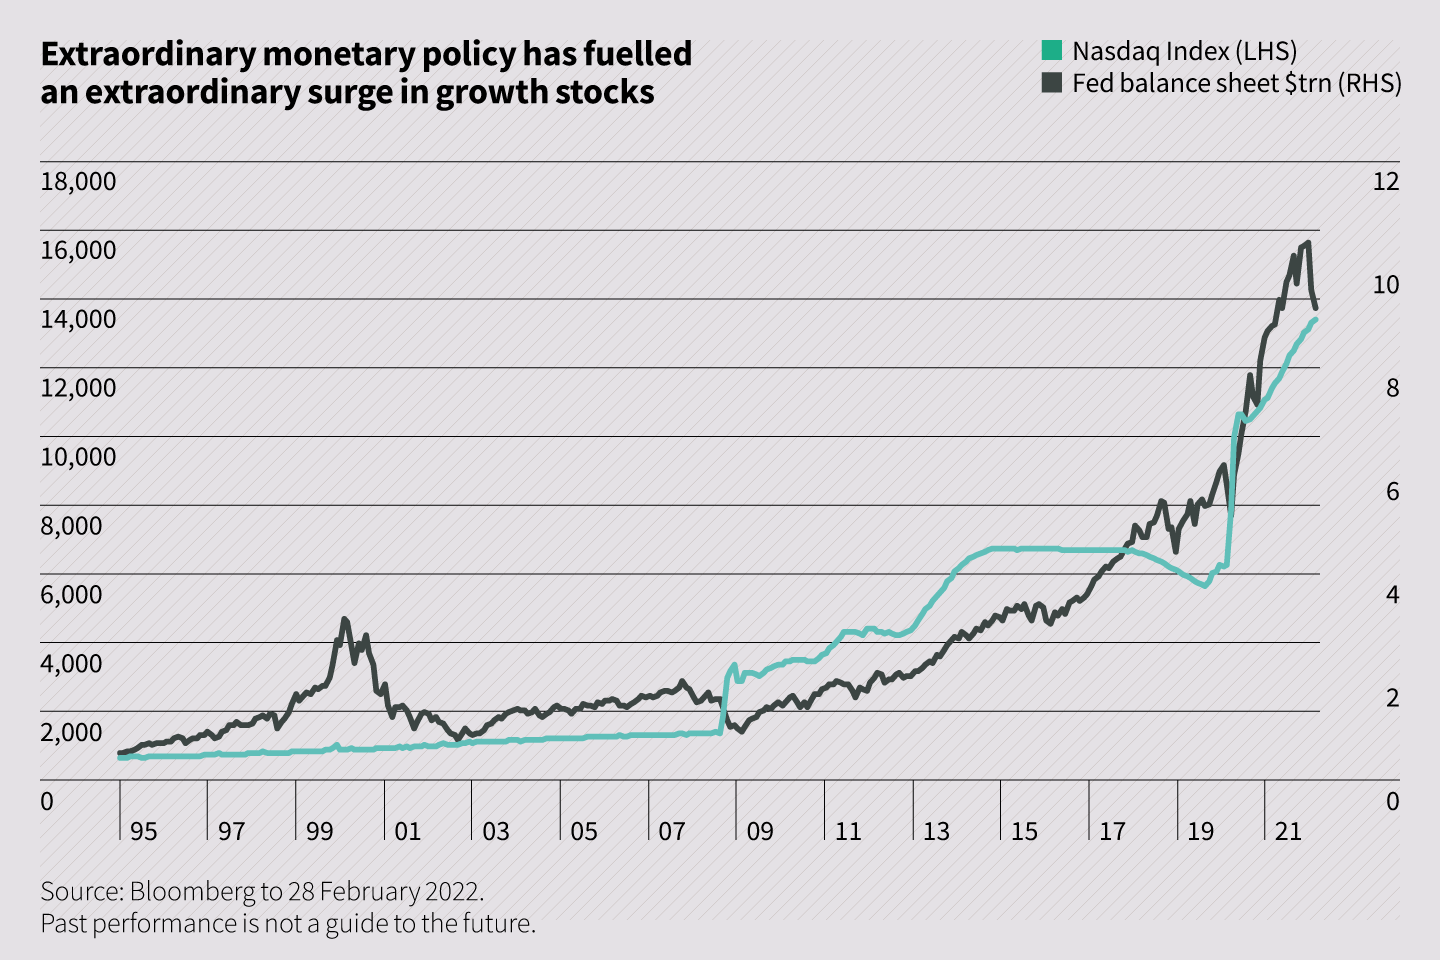 Extraordinary monetary policy has fuelled an extraordinary surge in growth stocks